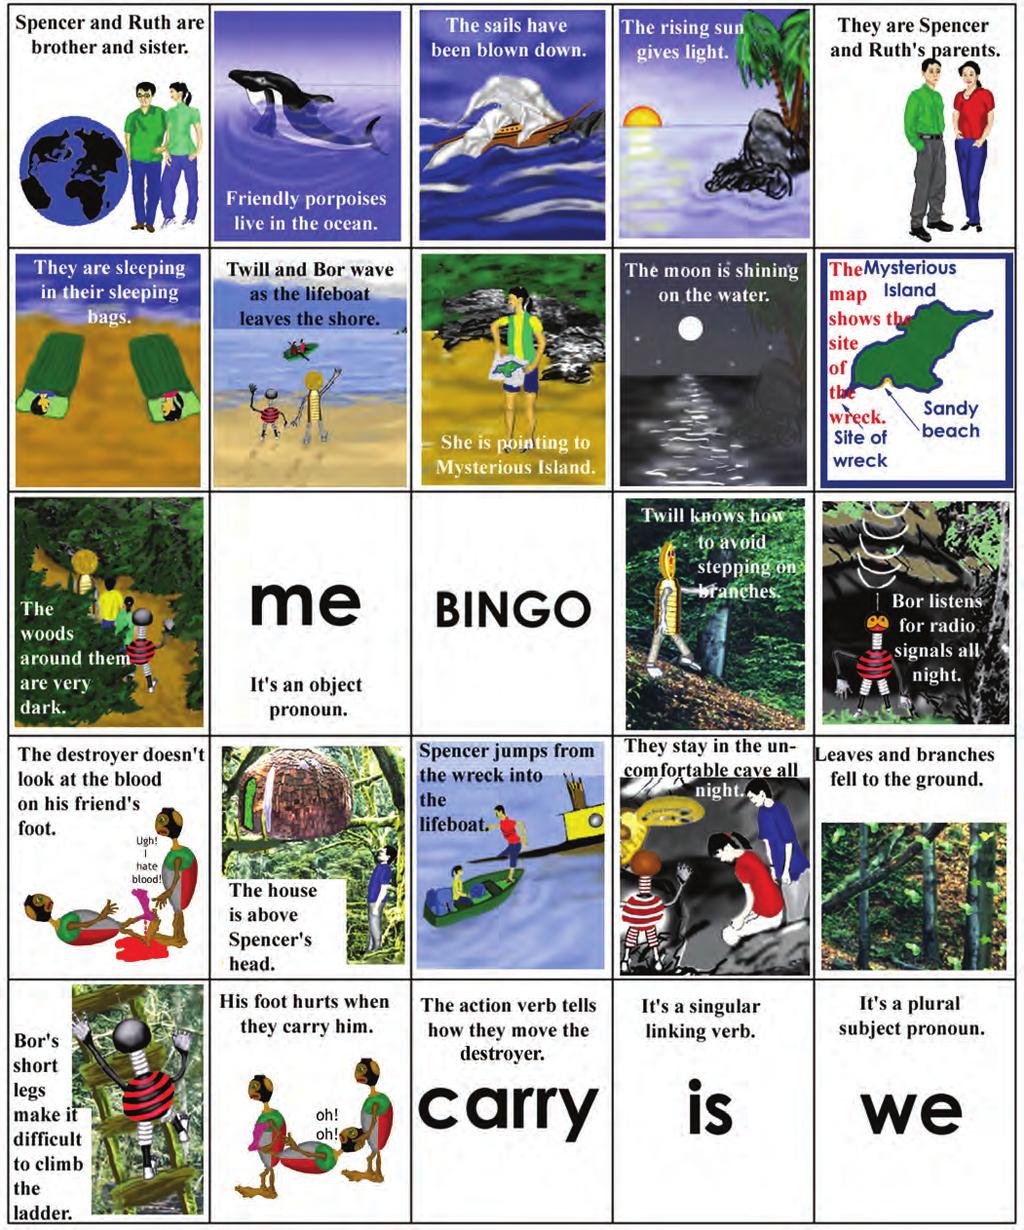 BOOK 5B TEACHER'S GUIDE Book 5B Bingo 1 Enrichment Copy